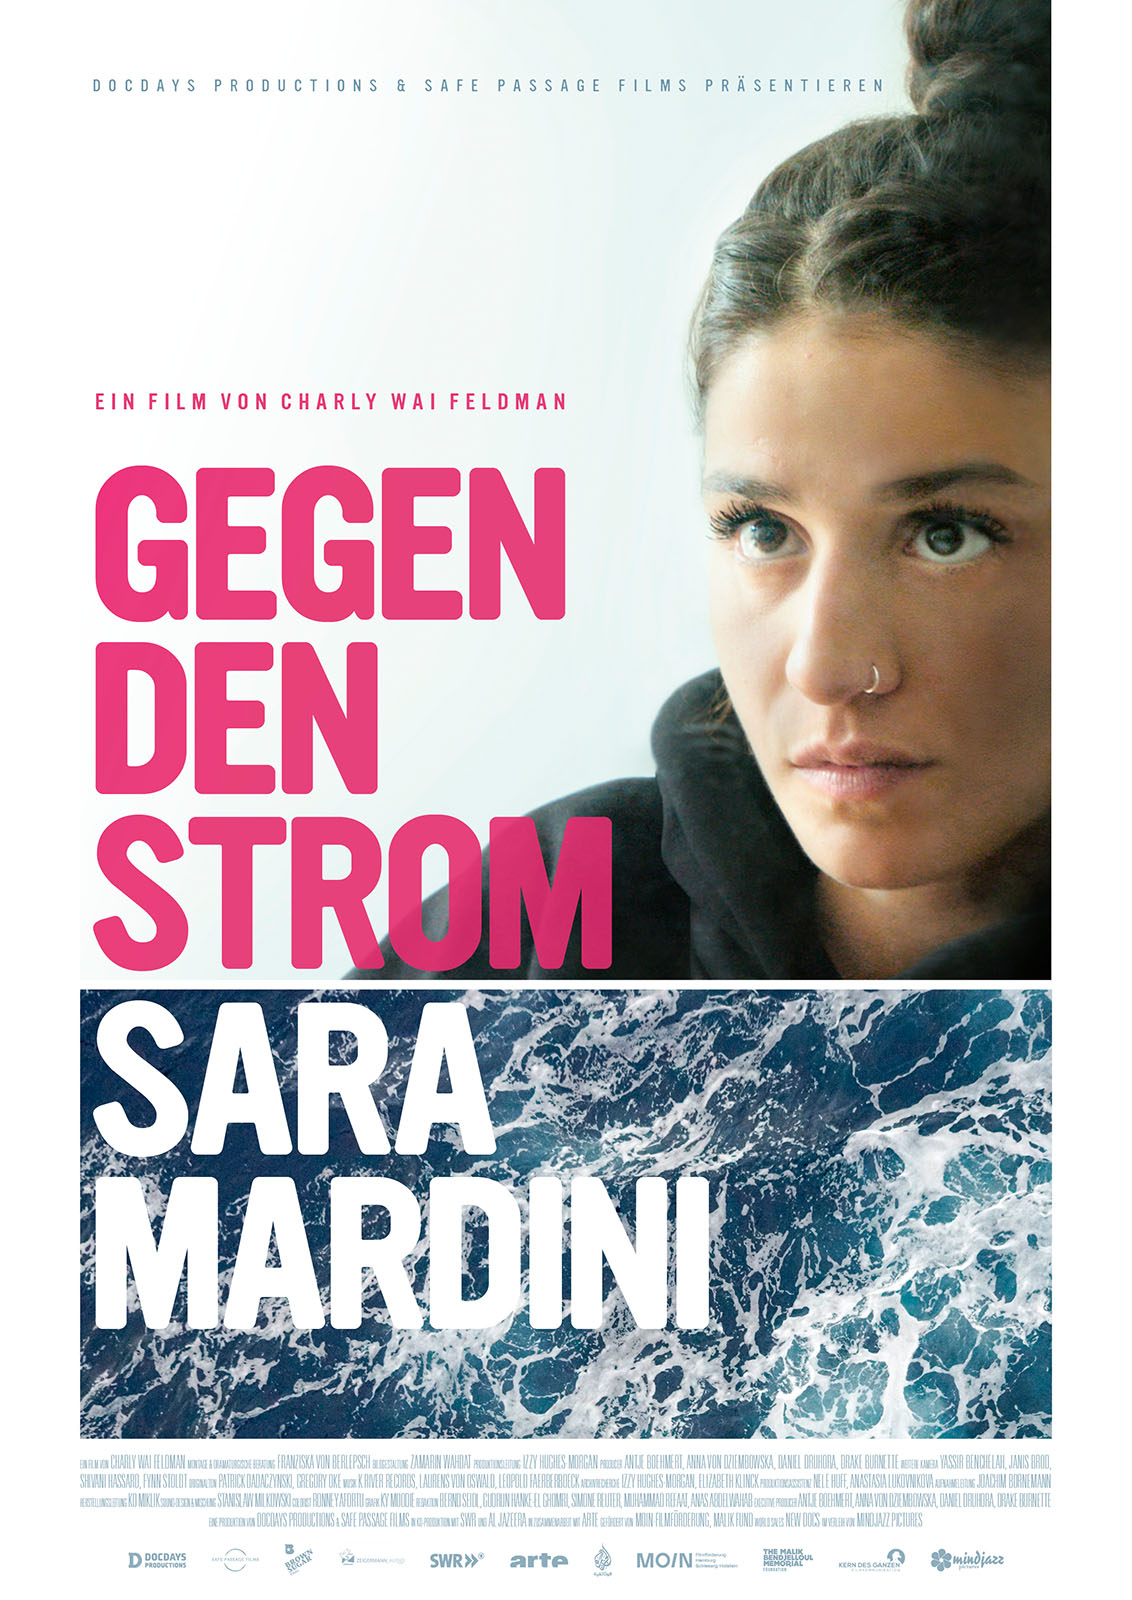 For over four years, filmmaker Charly Wai Feldman has followed the Syrian professional swimmer Sara Mardini